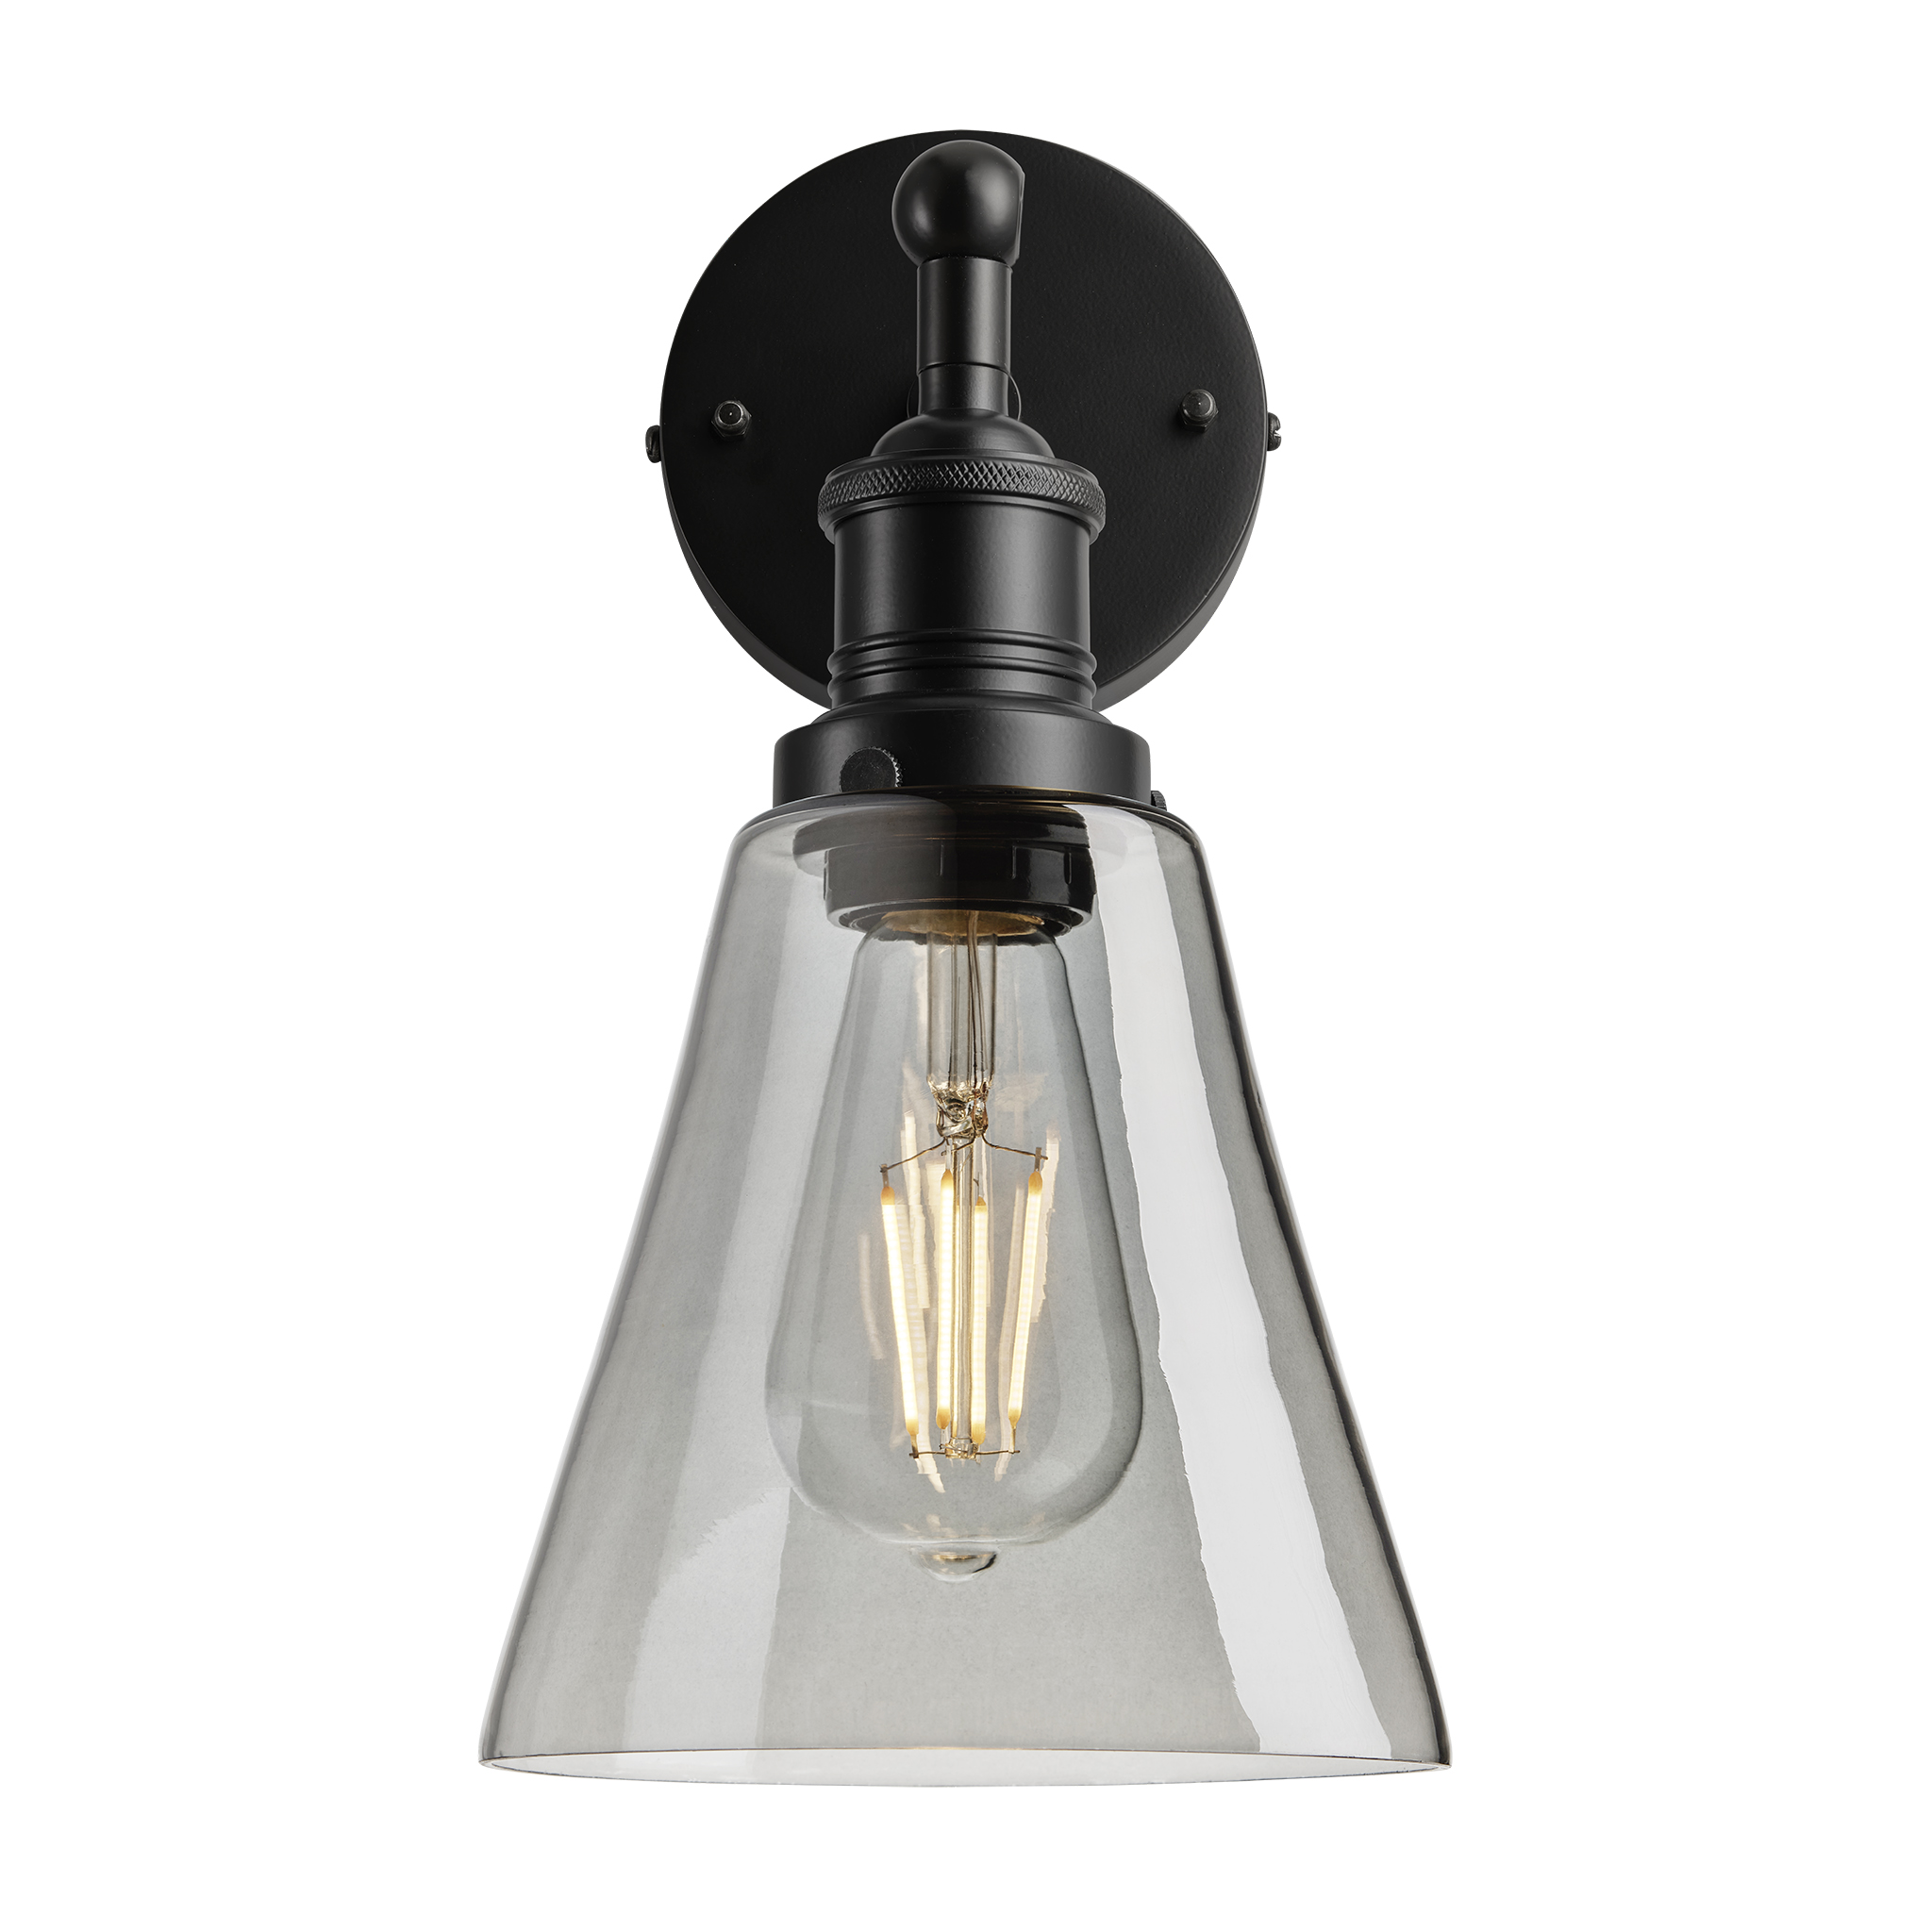 Brooklyn Tinted Glass Flask Wall Light - 6 Inch - Smoke Grey - Black Holder